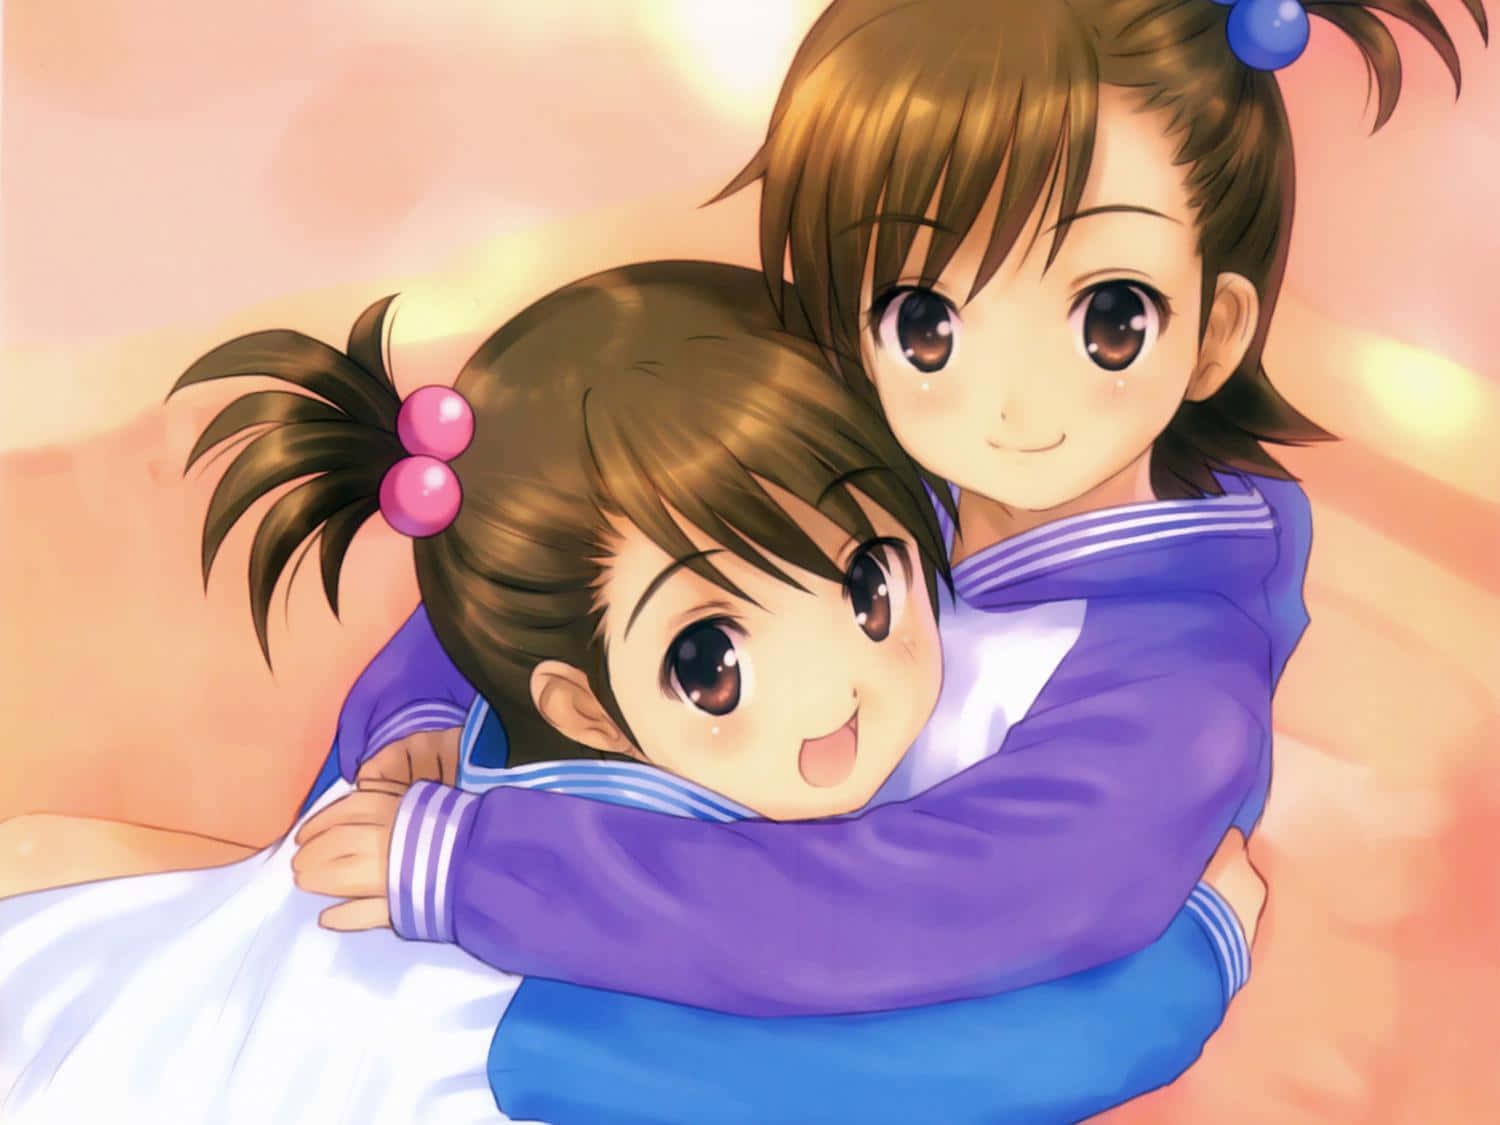 Amazing Anime Digital Artwork Of Cute Sisters Background